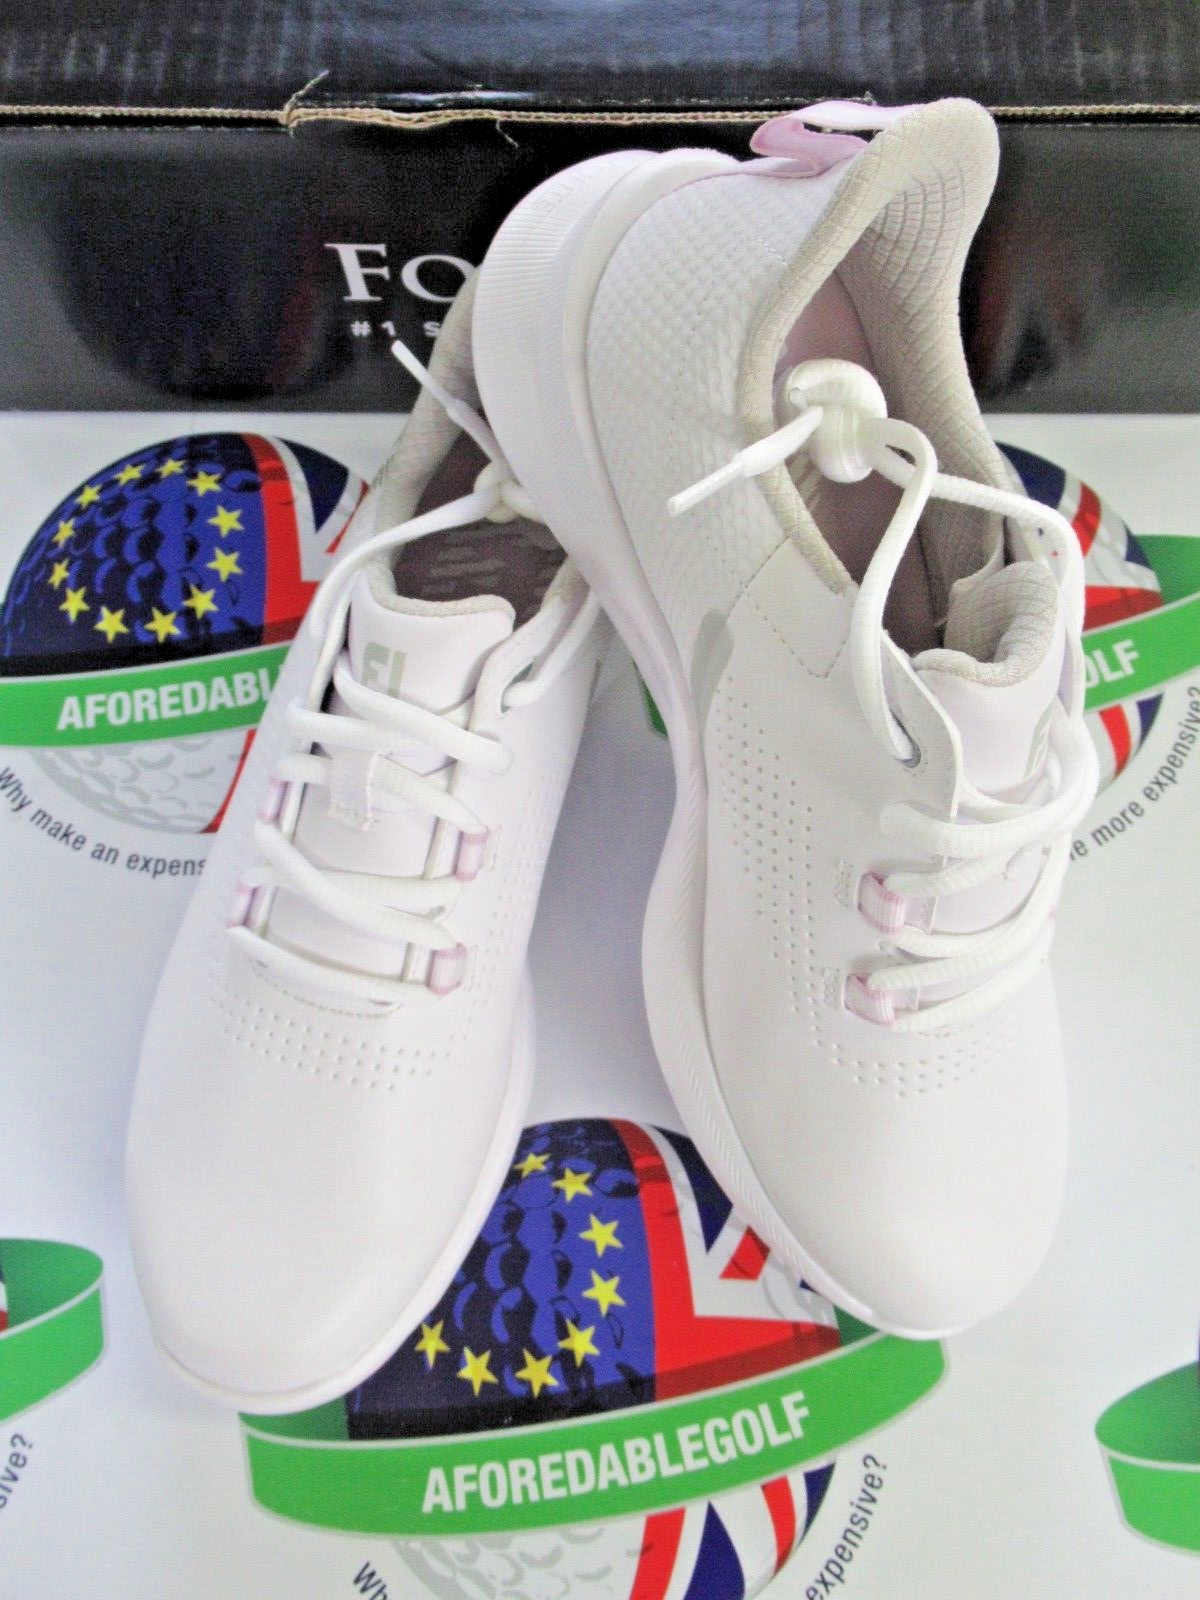 footjoy fuel womens golf shoes white/grey/pink 92373k uk size 4.5 medium